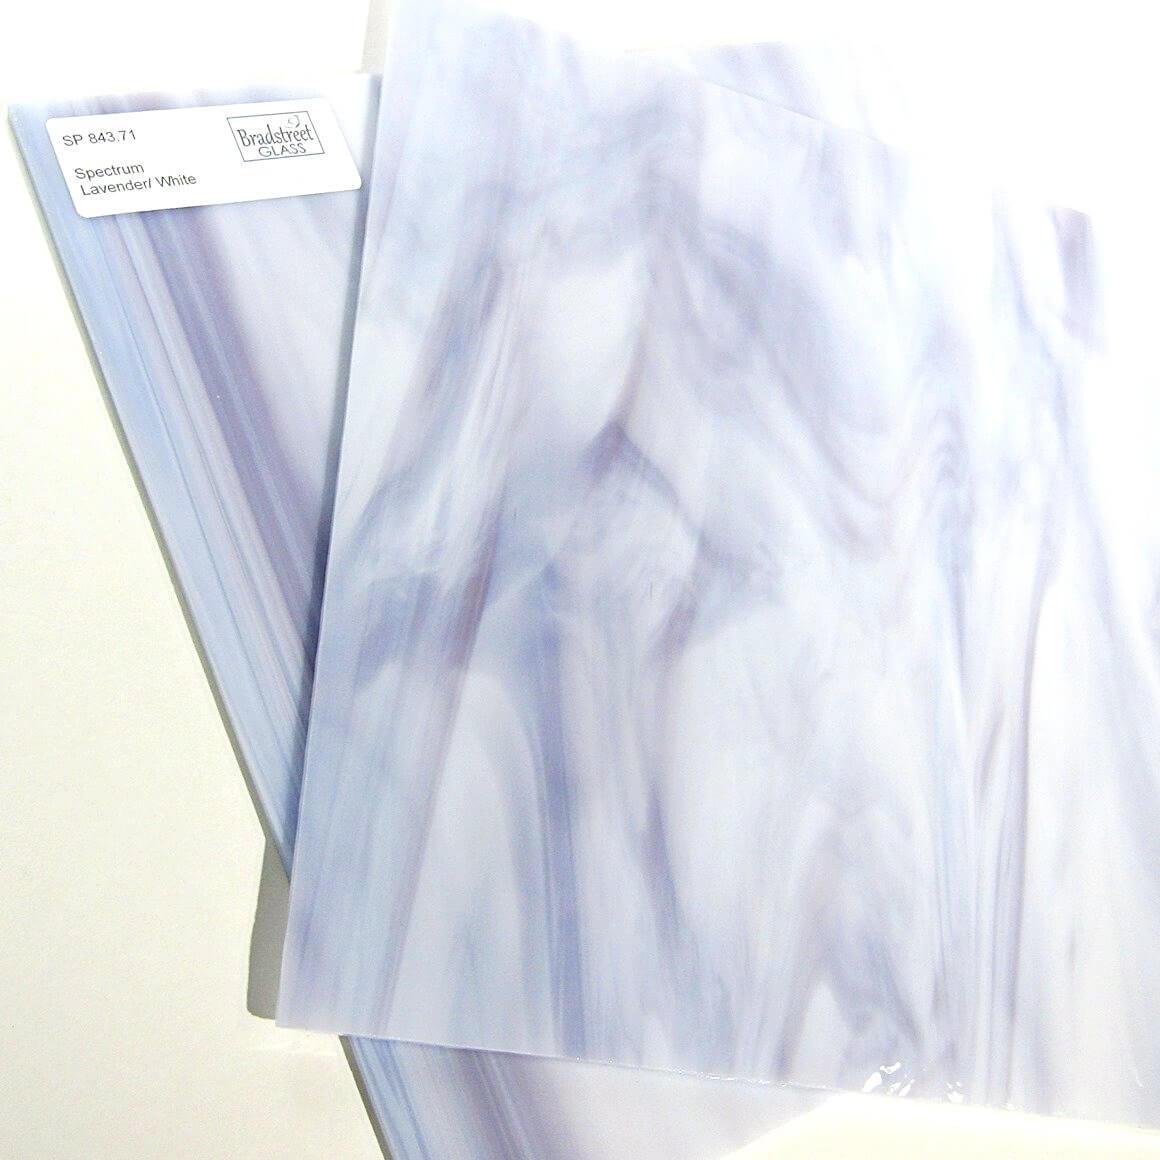 Lavender White Opal Stained Glass Sheet Spectrum Oceanside 843.71